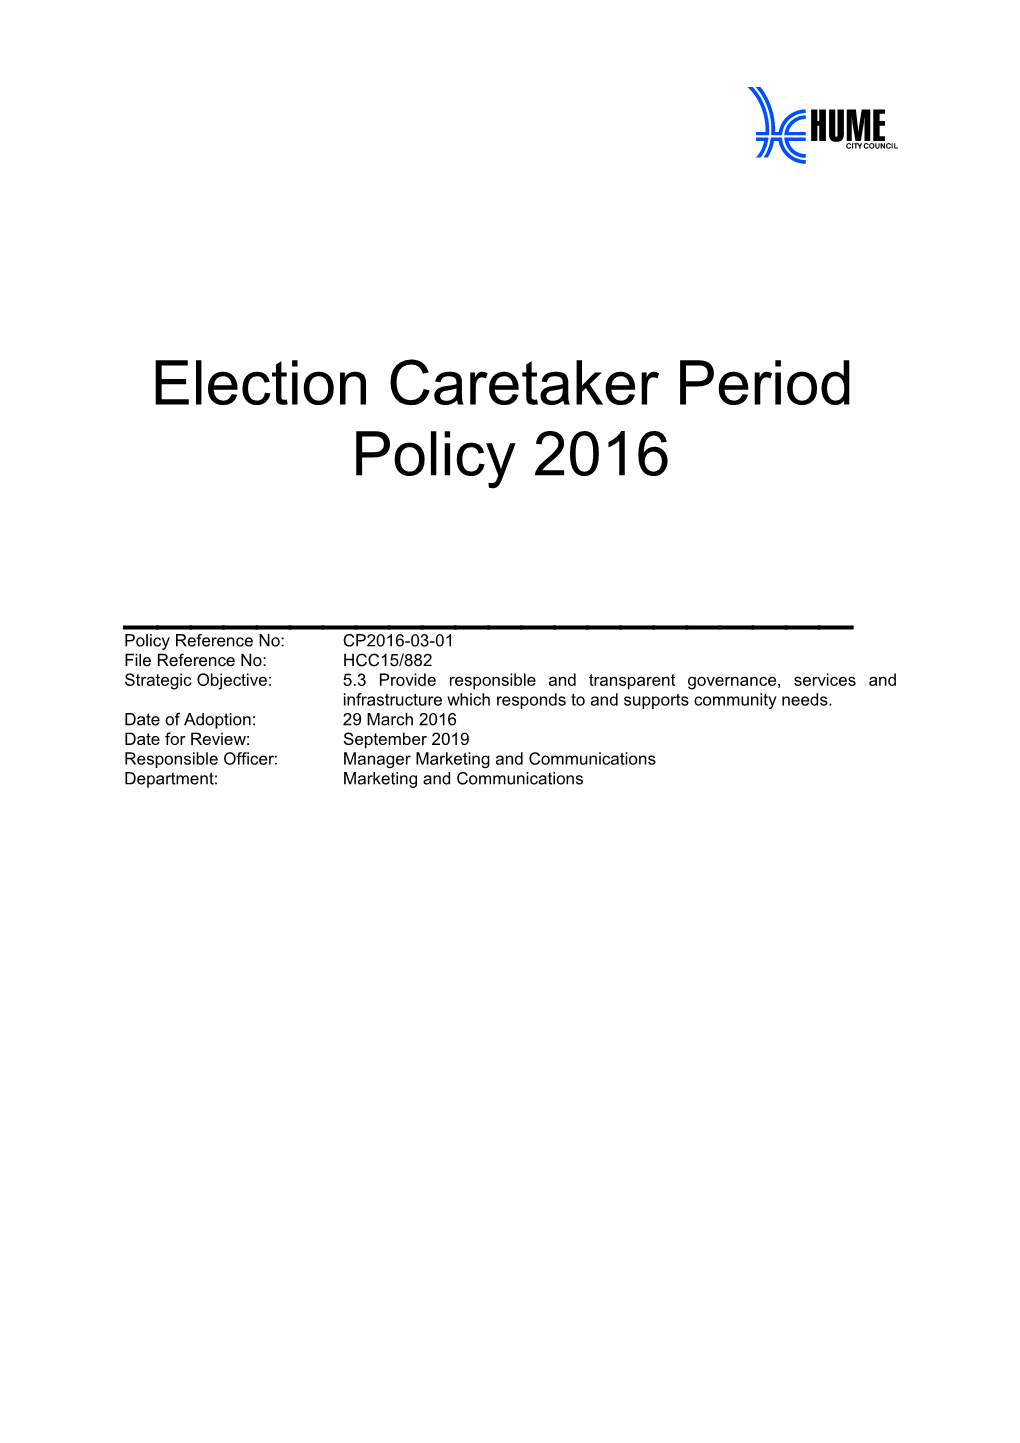 Election Caretaker Period Policy 2016